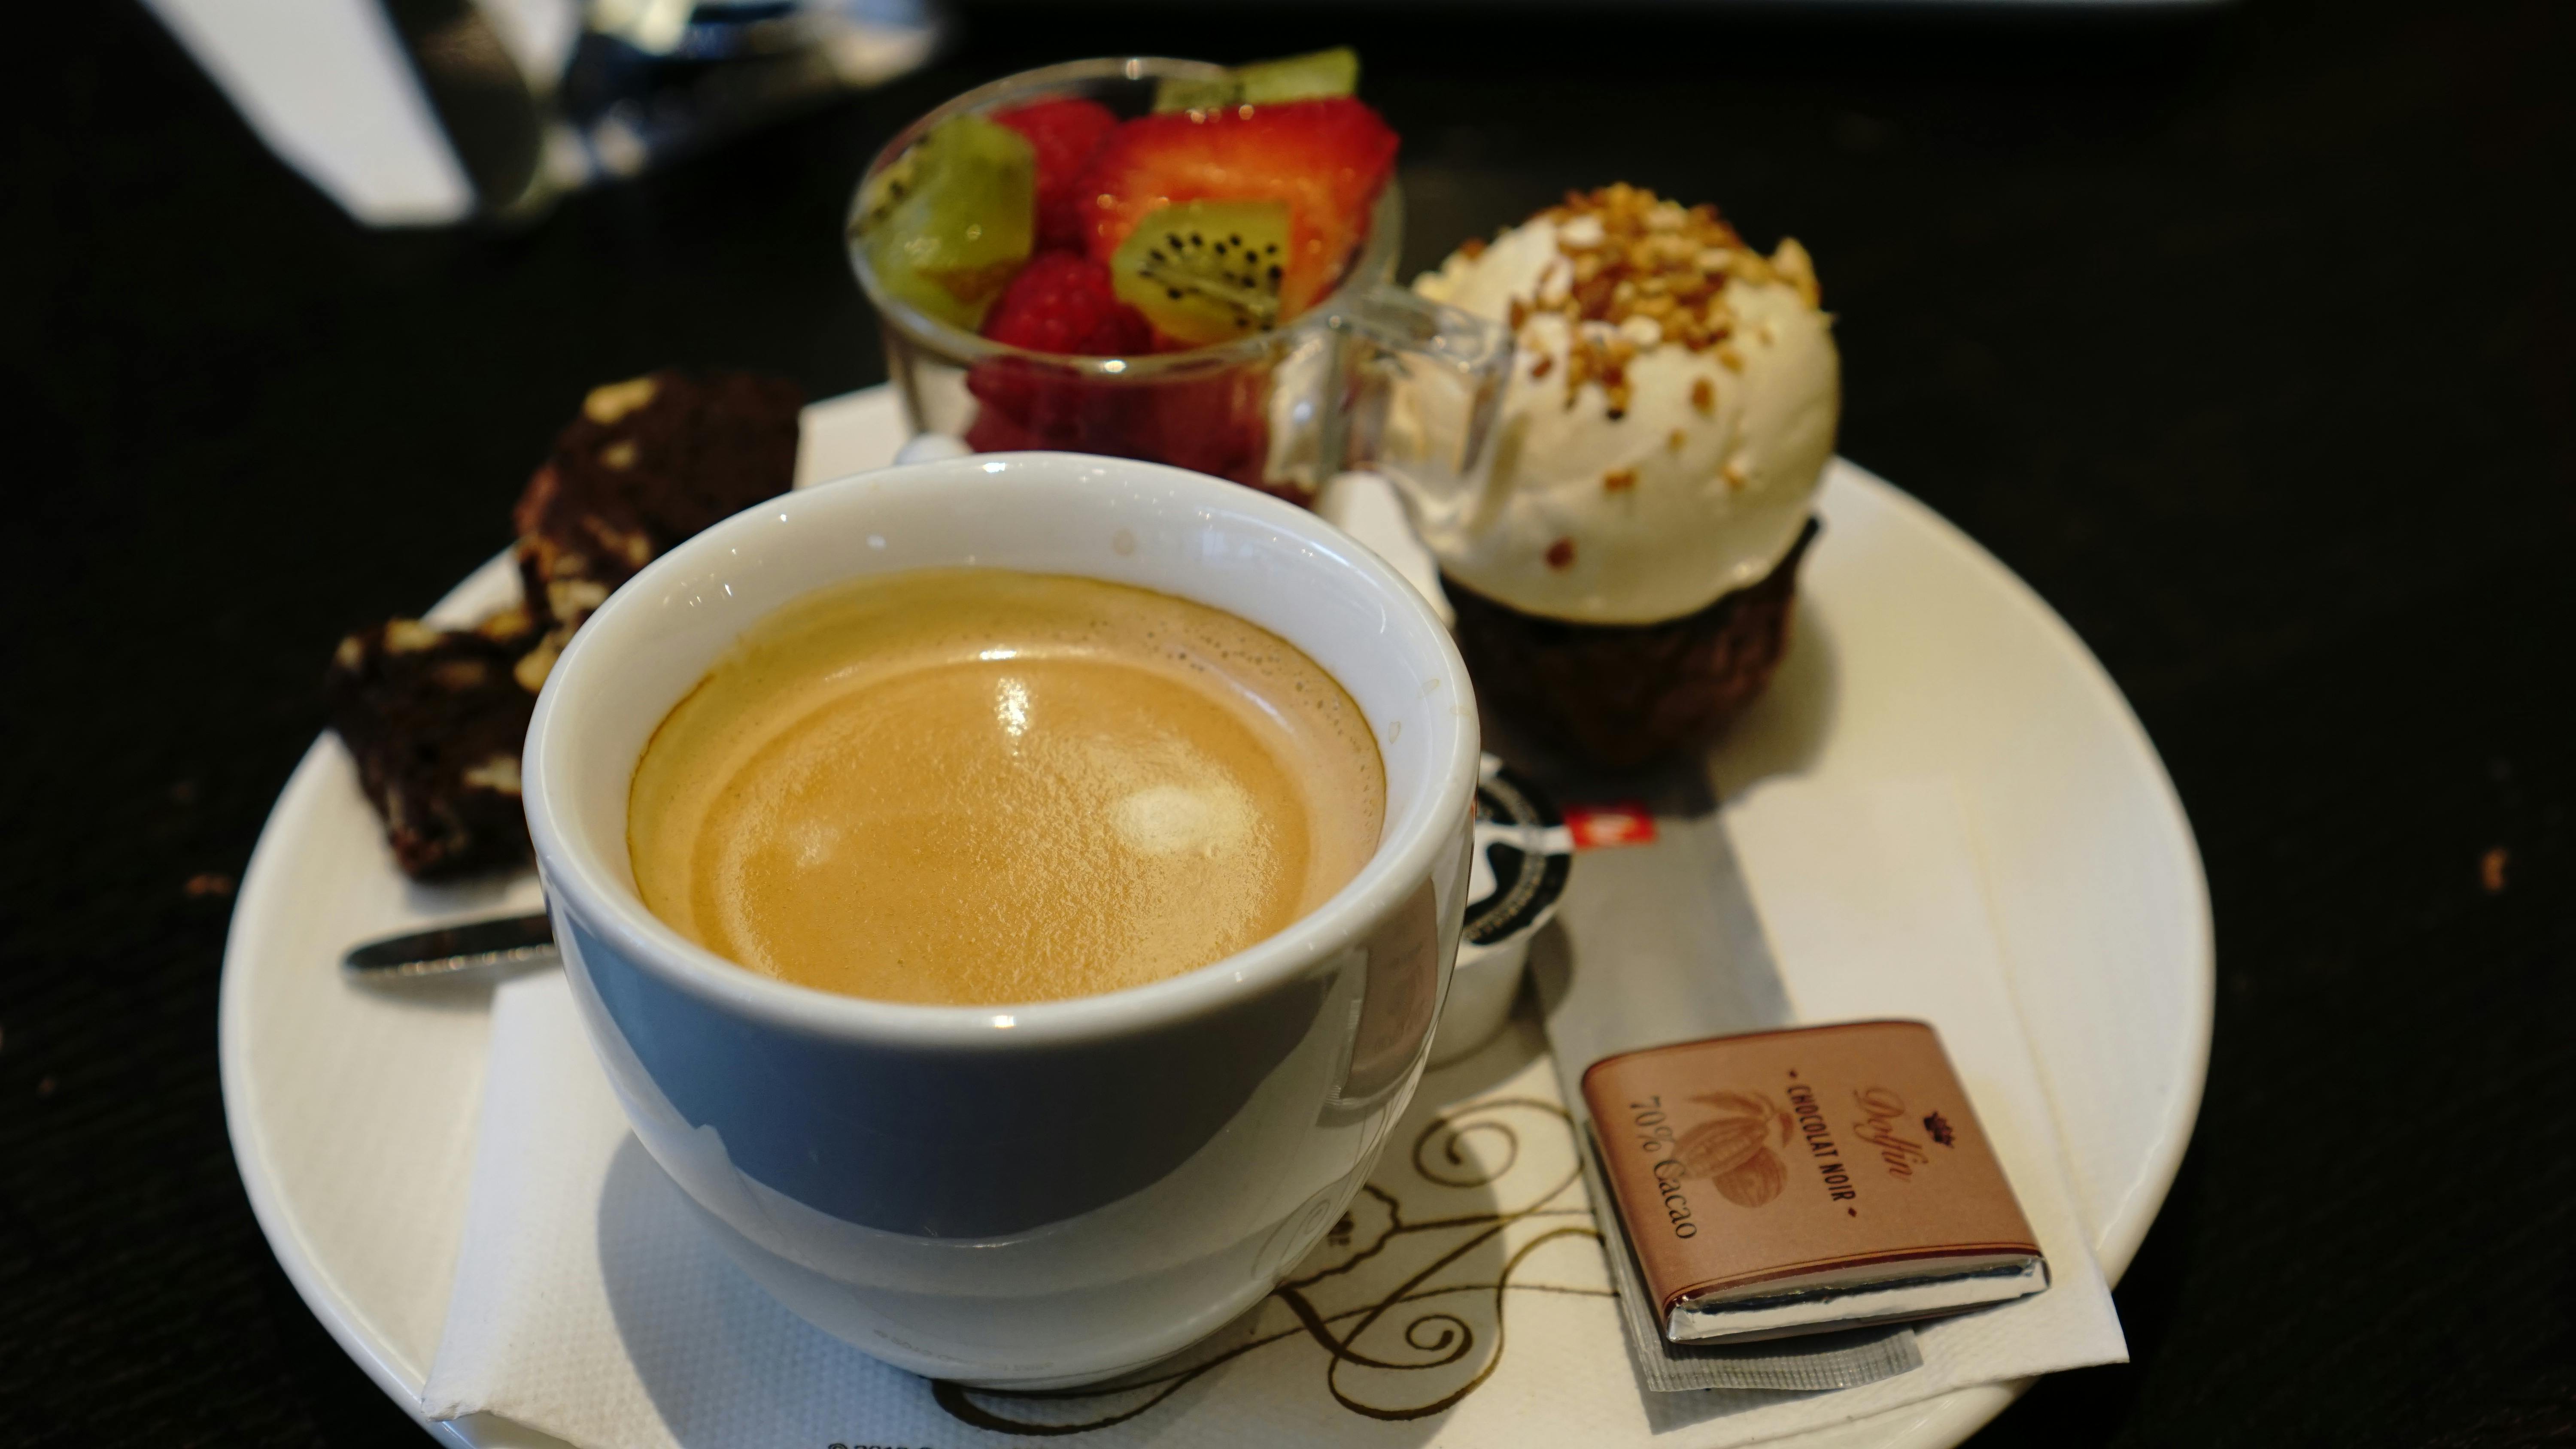 Free stock photo of chocolate, coffee, fruit